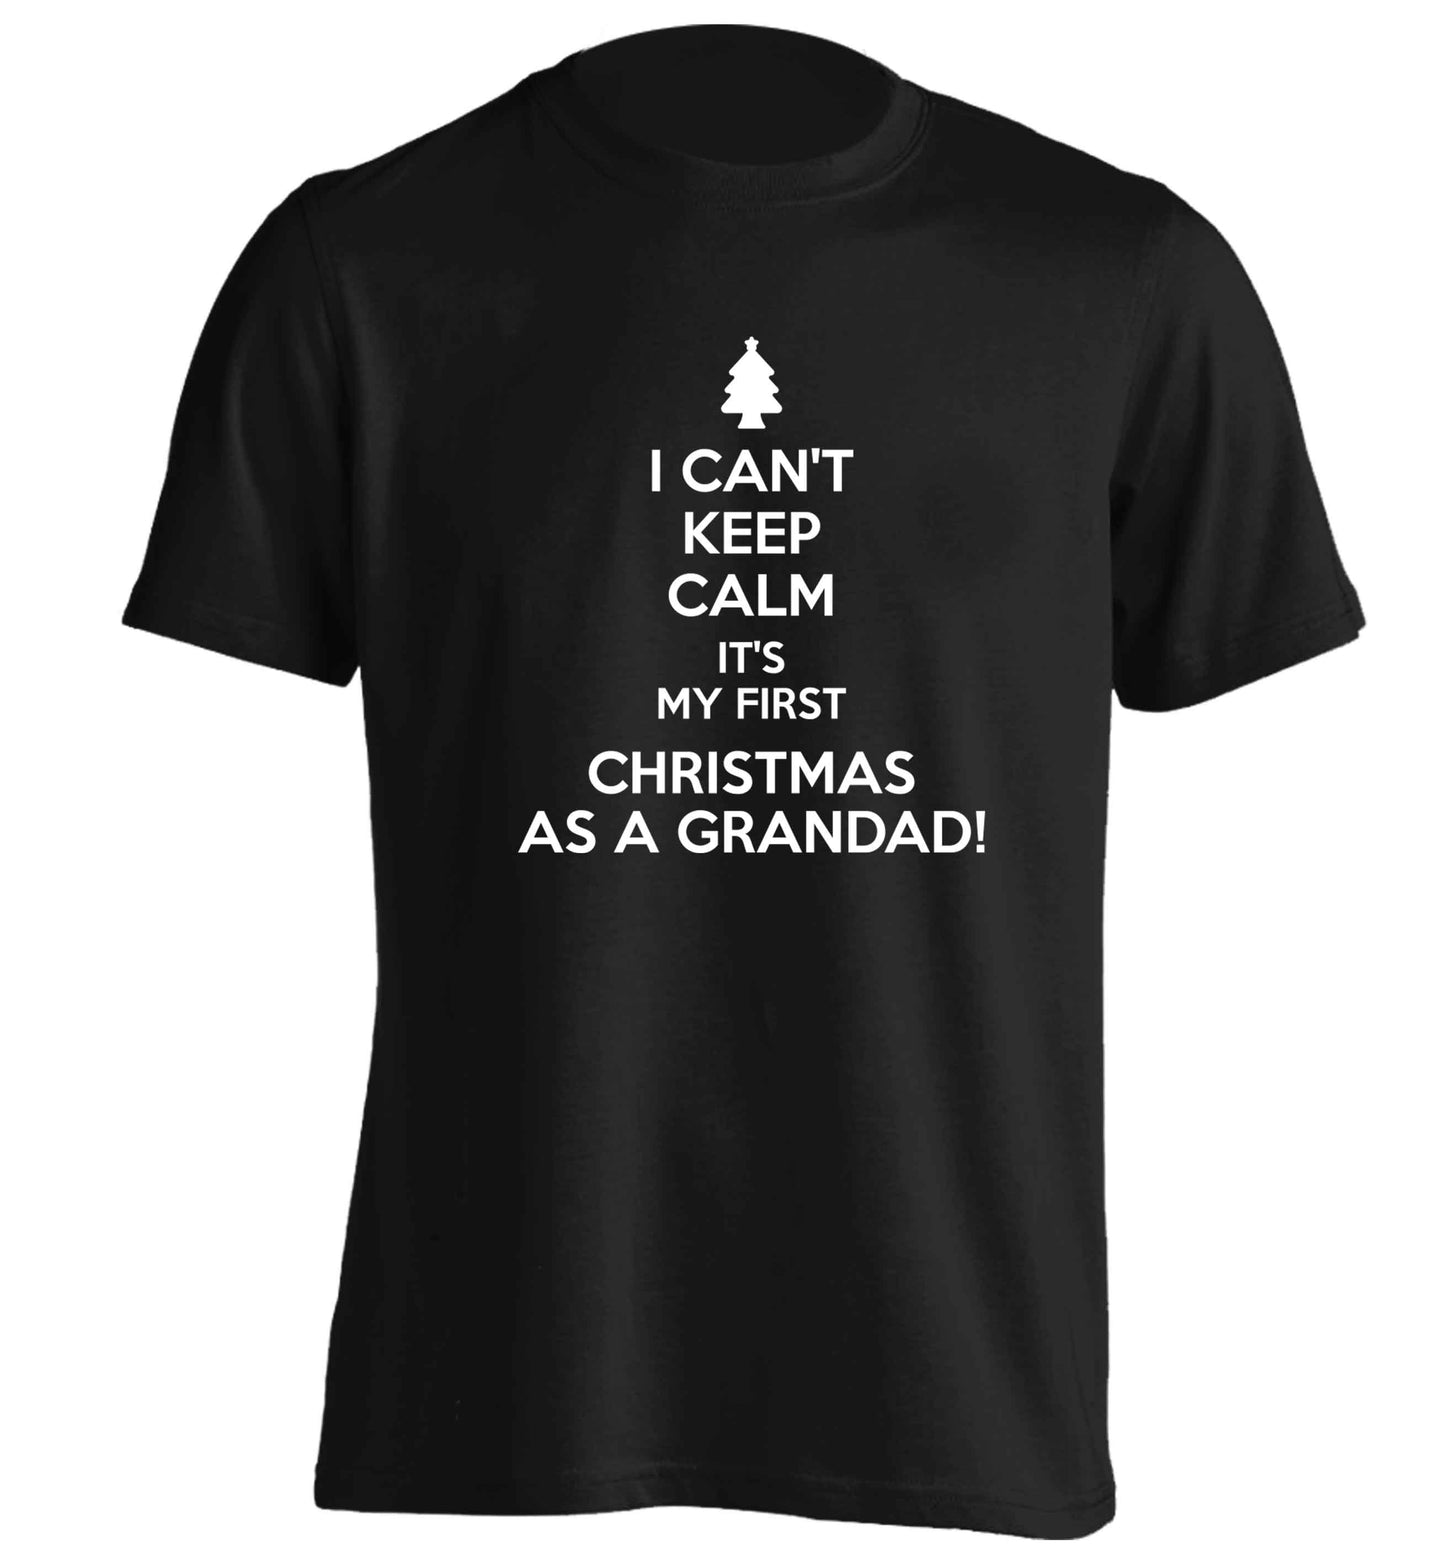 I can't keep calm it's my first Christmas as a grandad! adults unisex black Tshirt 2XL